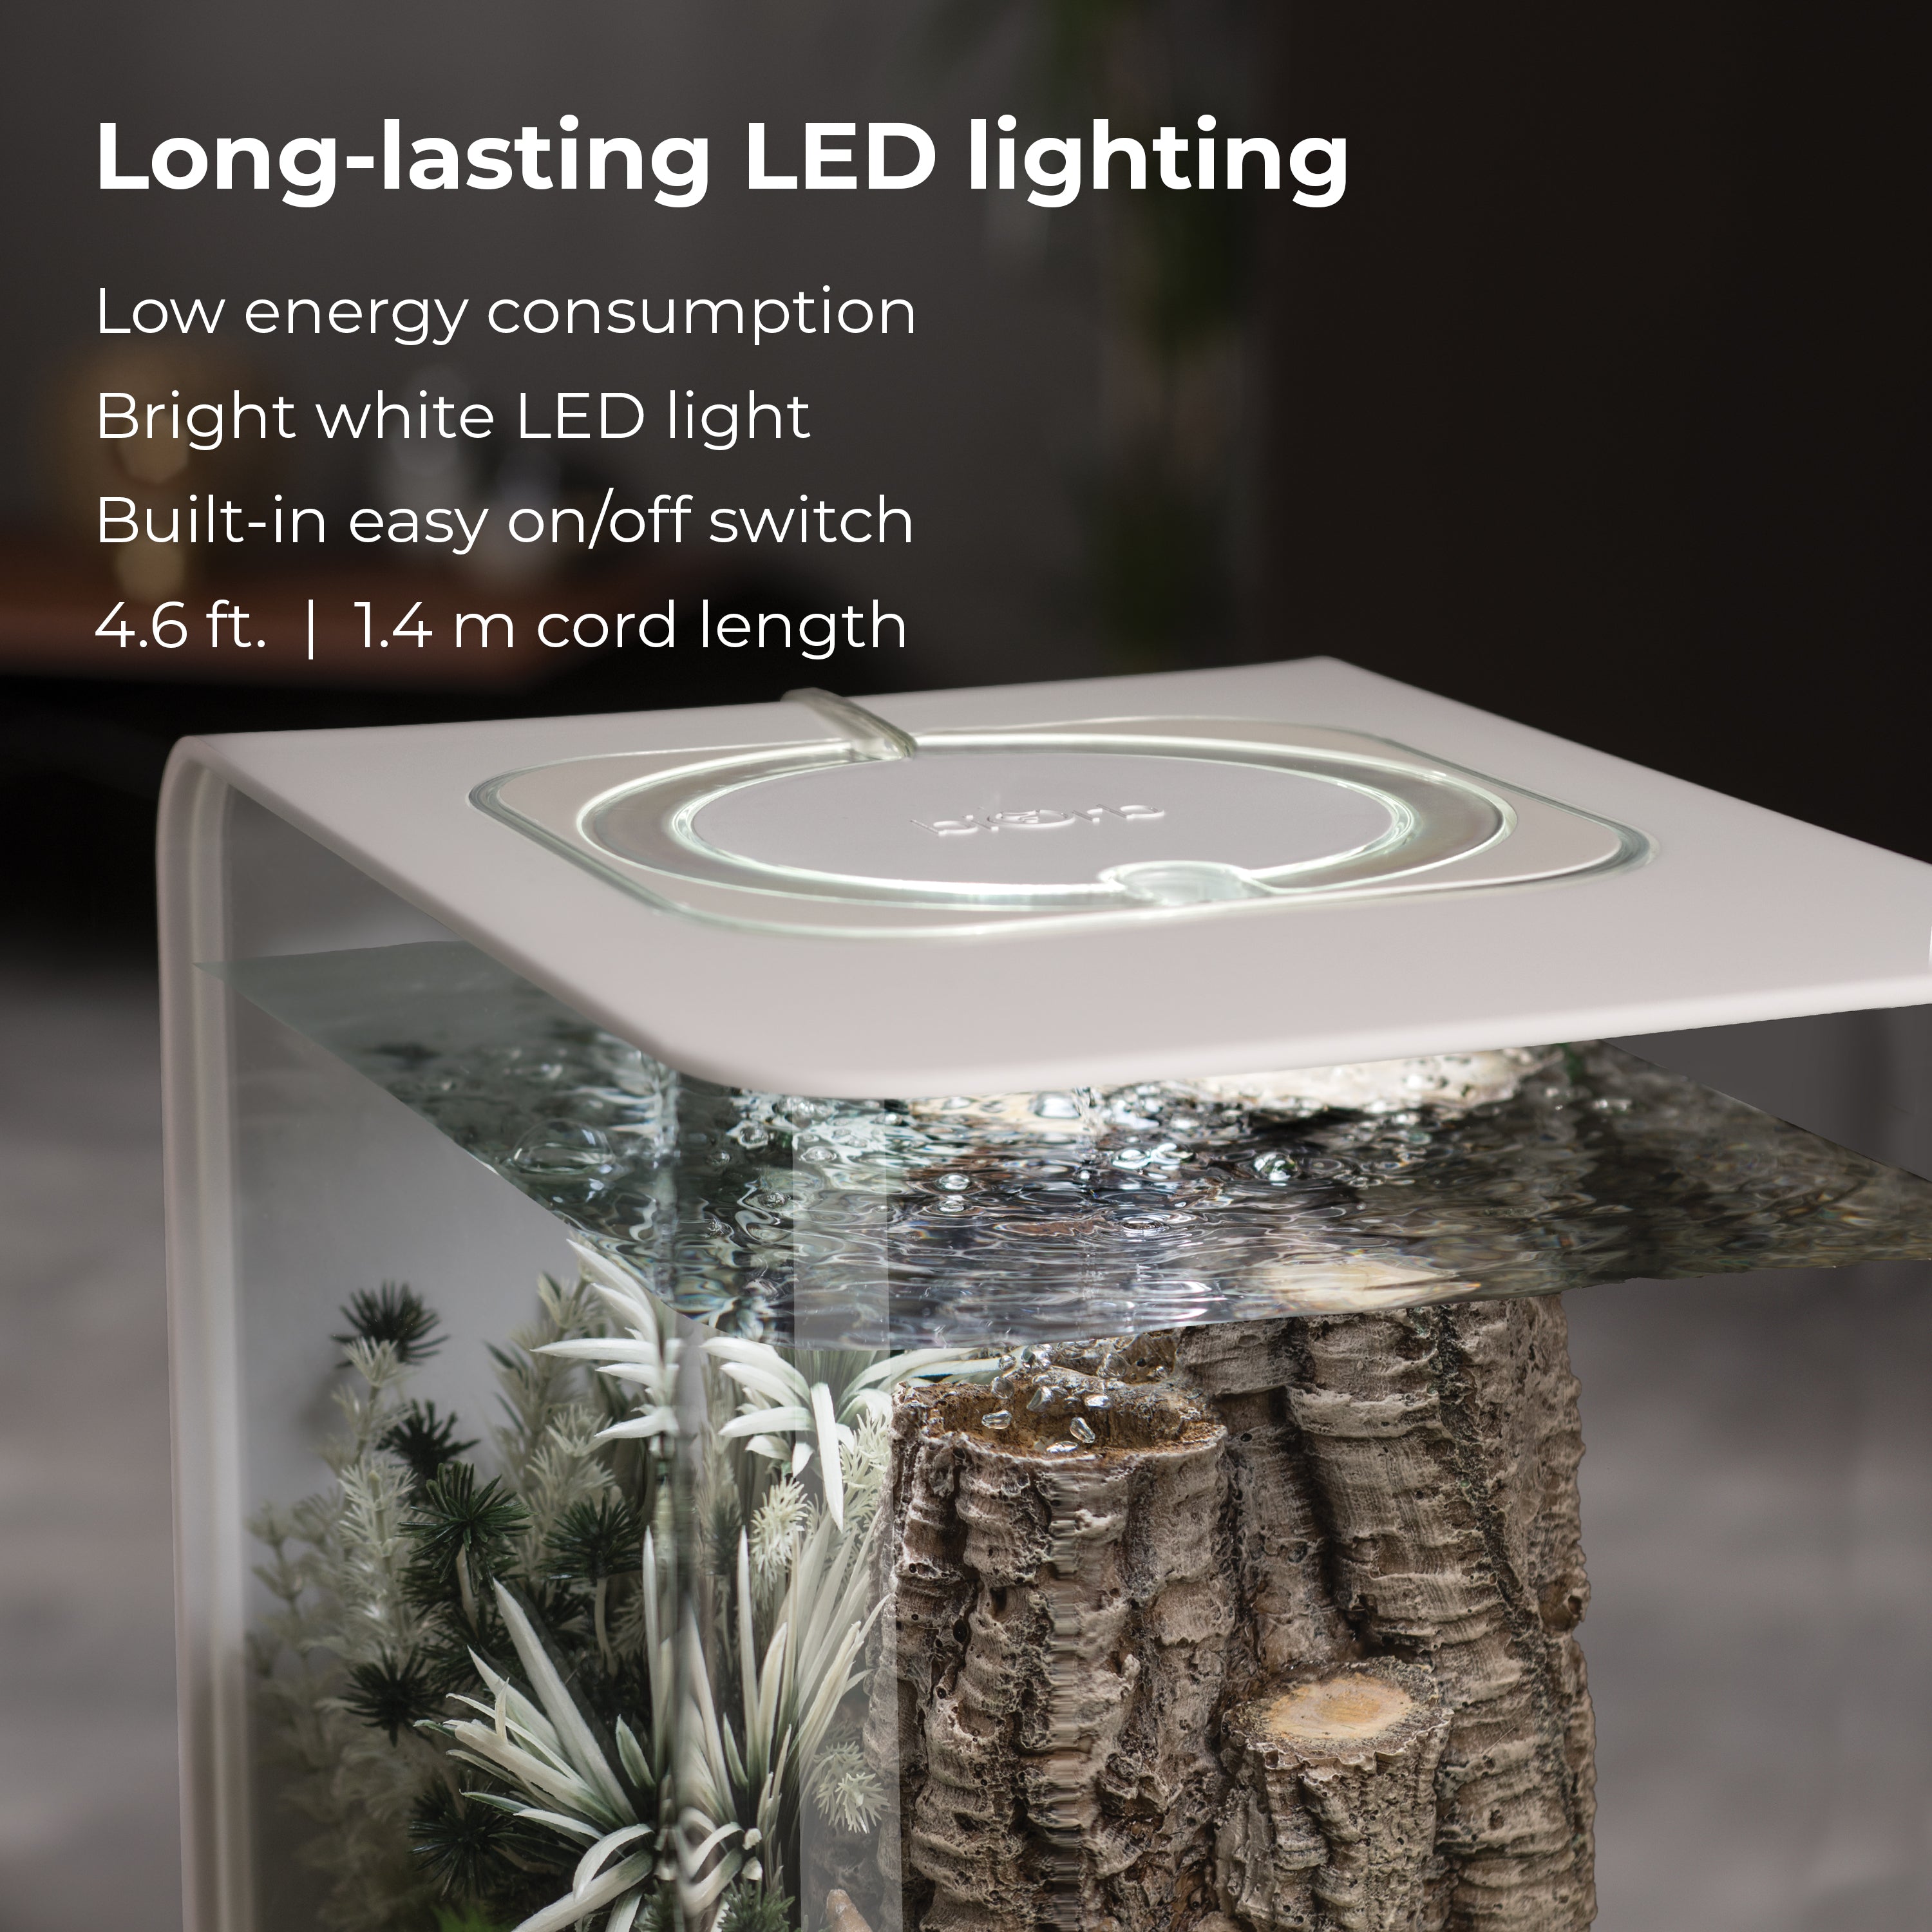 FLOW 15 Aquarium with Standard Light - 4 gallon features Long-lasting LED lighting